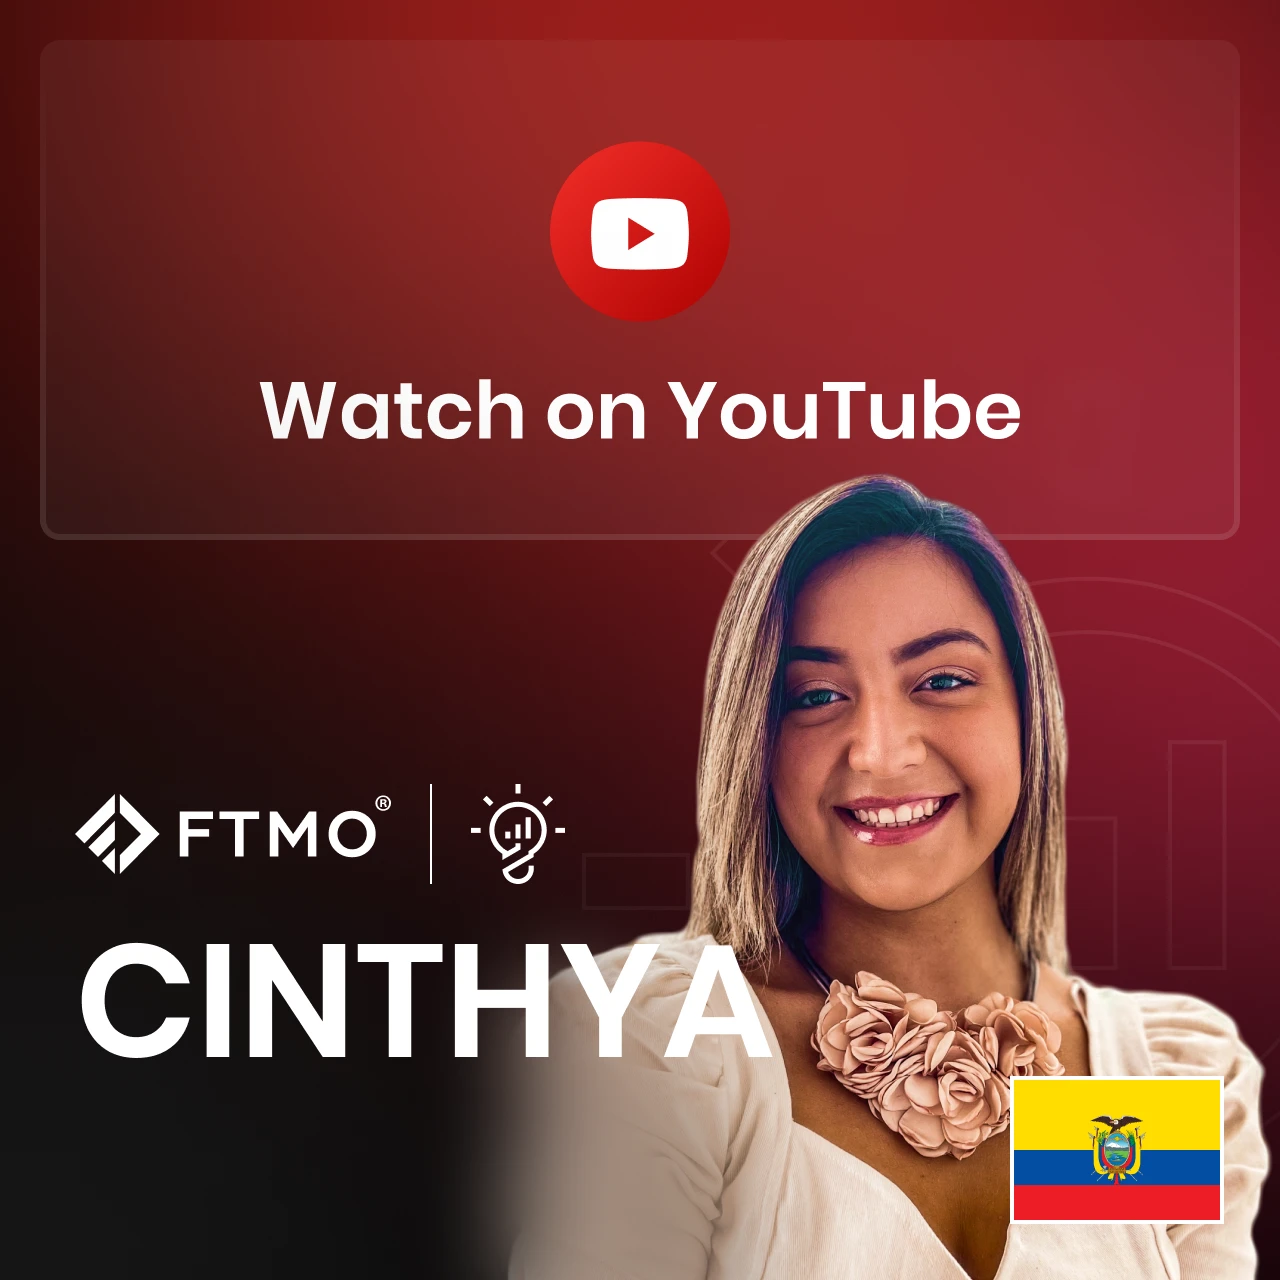 Cinthya z Ekvádoru